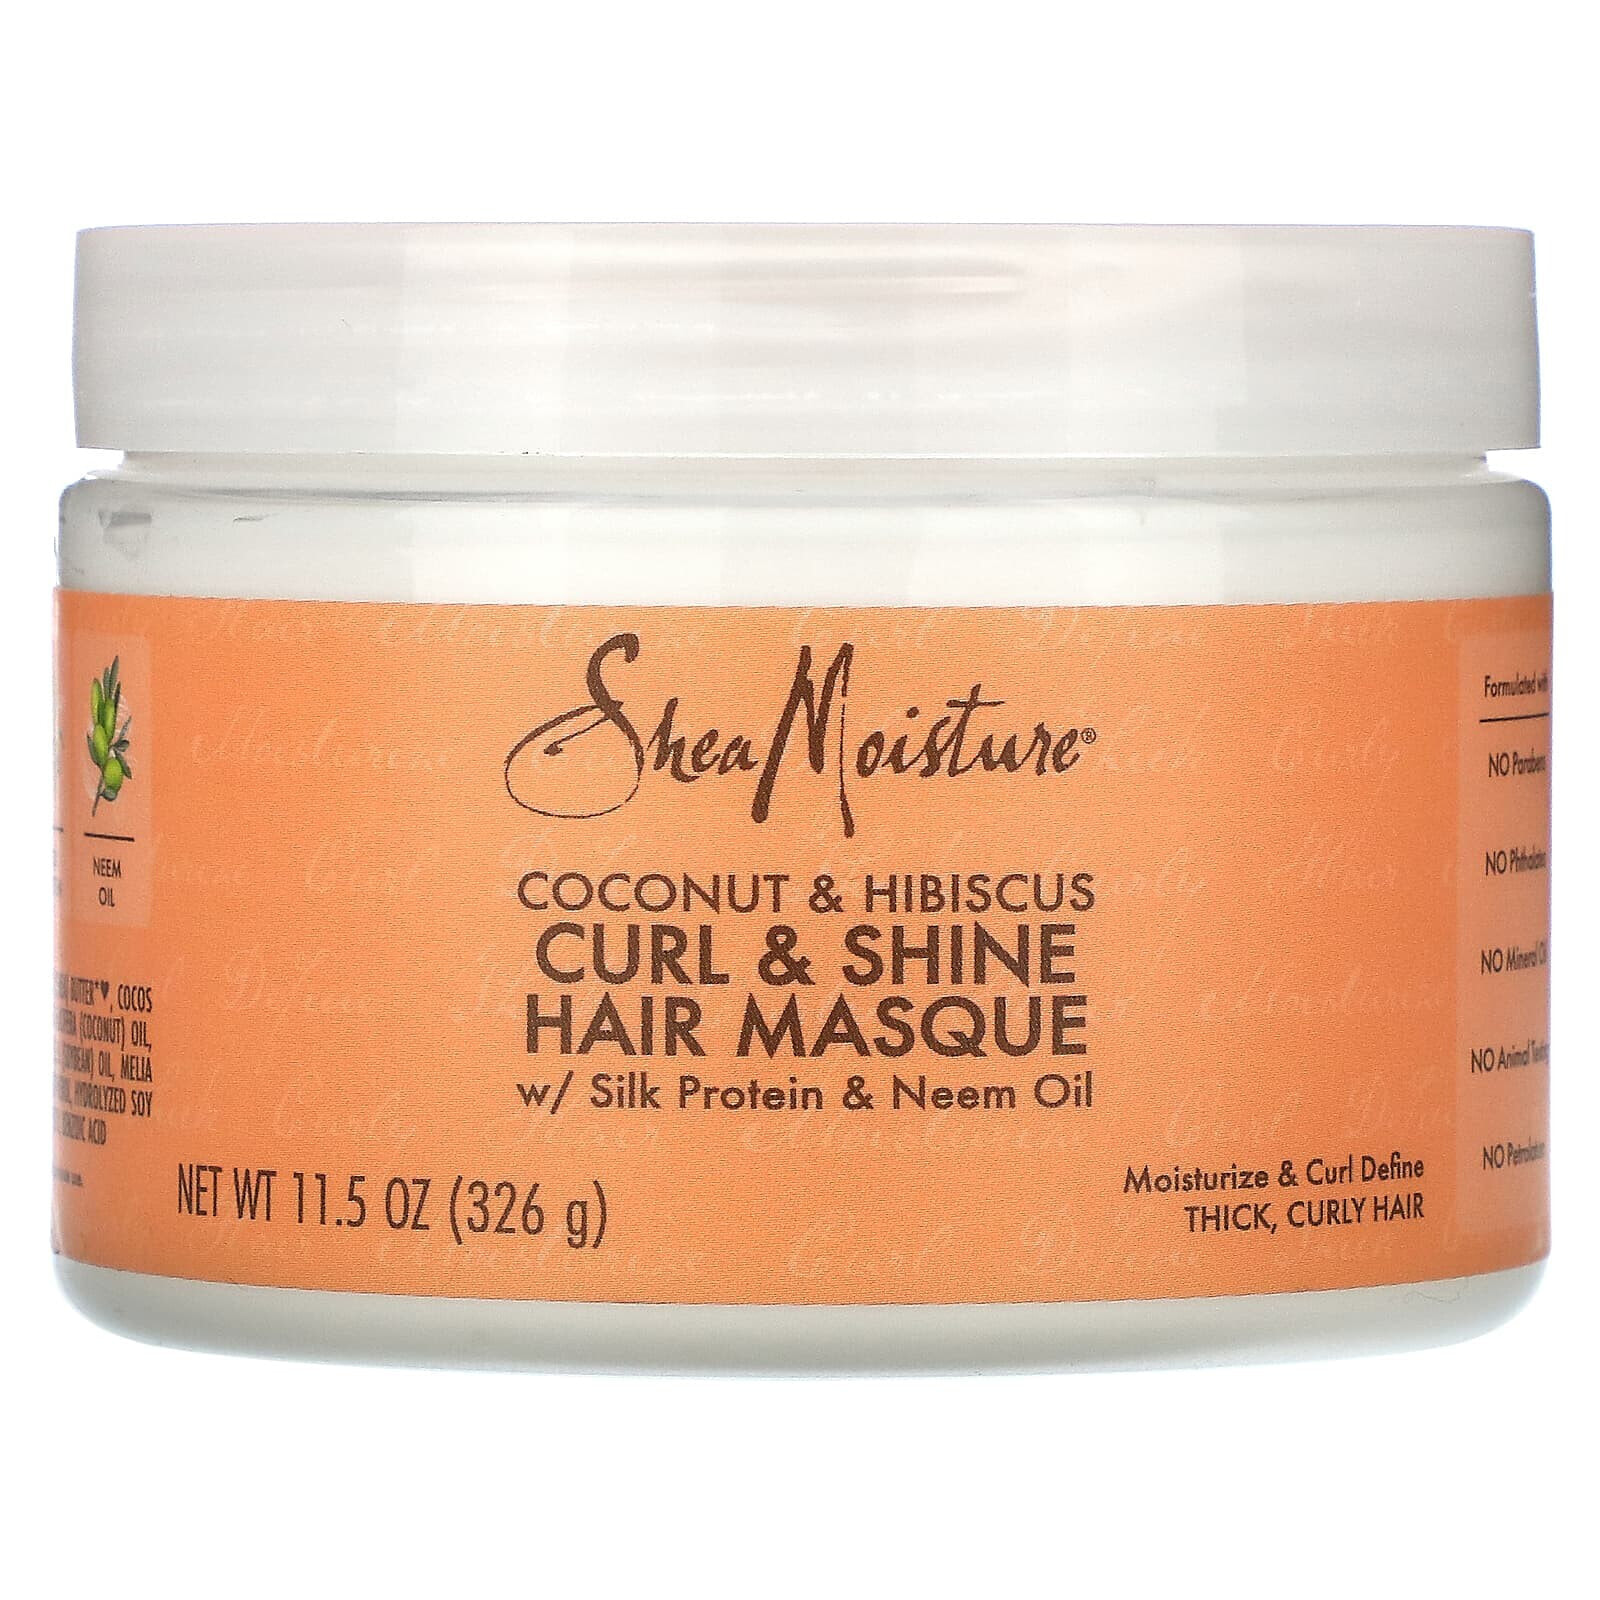 Curl & Shine Hair Masque, Coconut & Hibiscus, 11.5 oz (326 g)